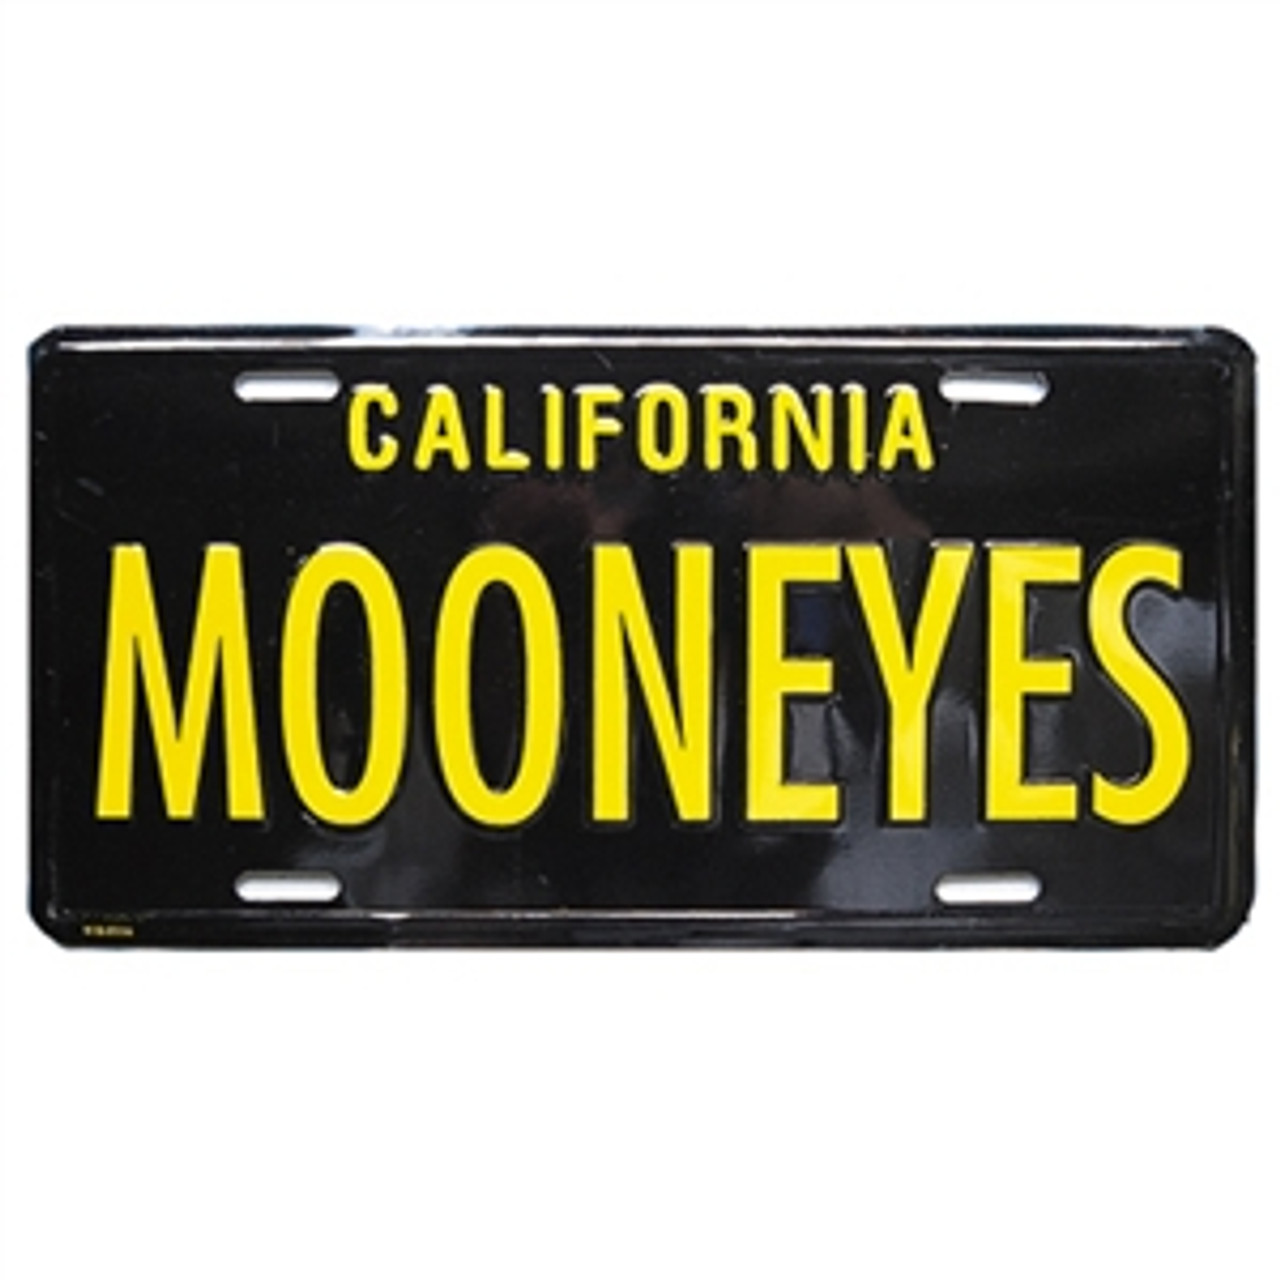 Mooneyes California License Plate, Black & Yellow